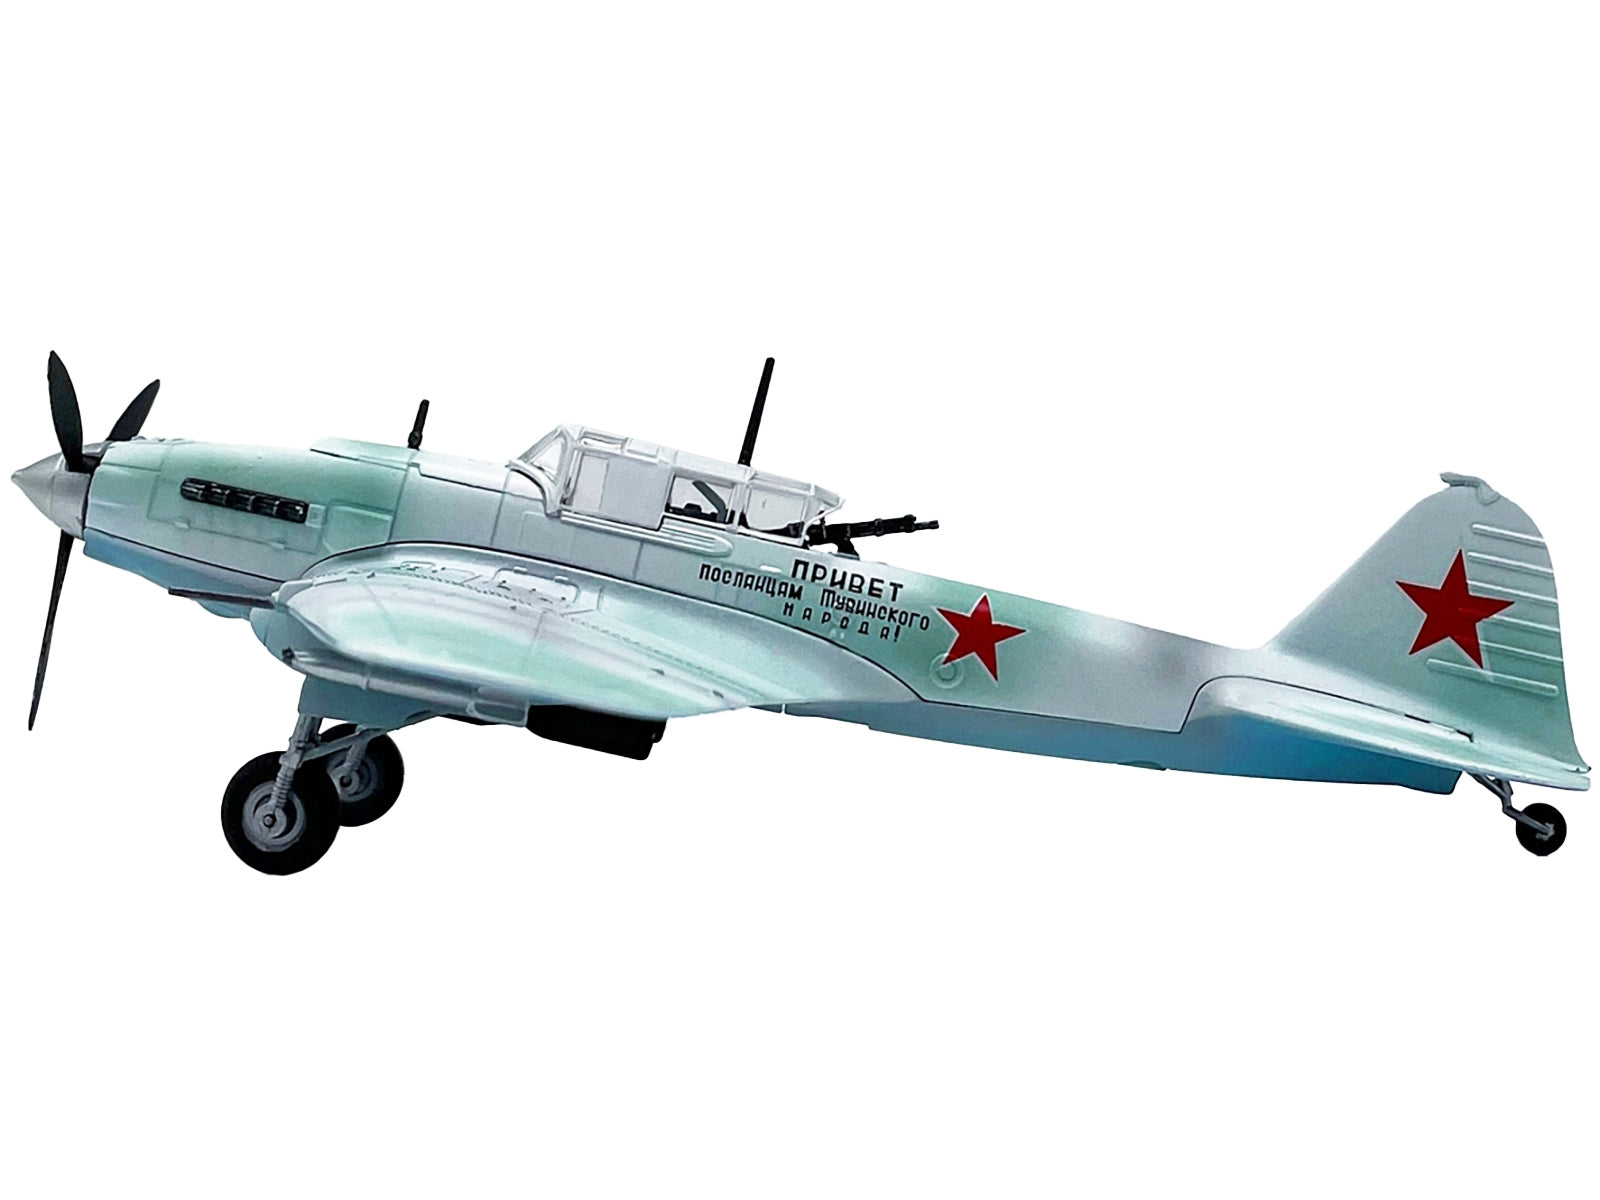 Ilyushin IL-2M3 Sturmovik Aircraft White Camouflage "Hello to the Envoys of the Tuvan People" Soviet Air Force 1/72 Diecast Model Airplane by Legion